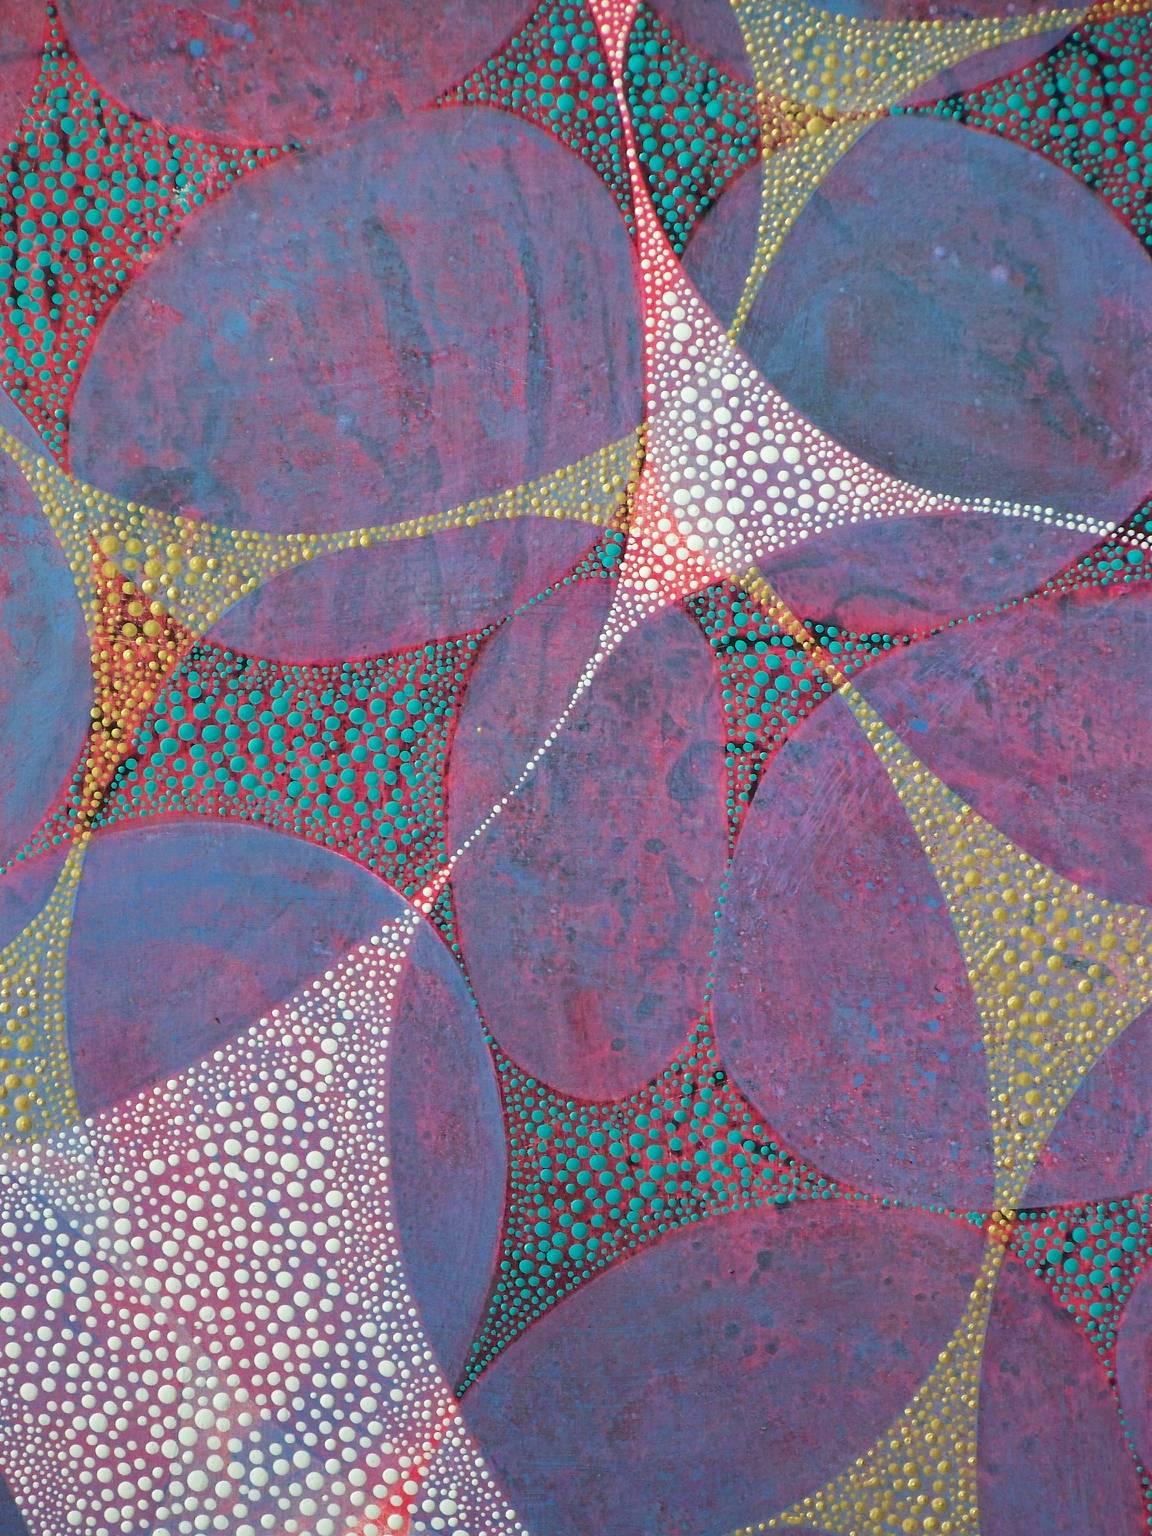 „Entanglement 3“, abstraktes, violettes, blaues, tealfarbenes, rotes, goldenes Acrylgemälde (Abstrakt), Painting, von Denise Driscoll